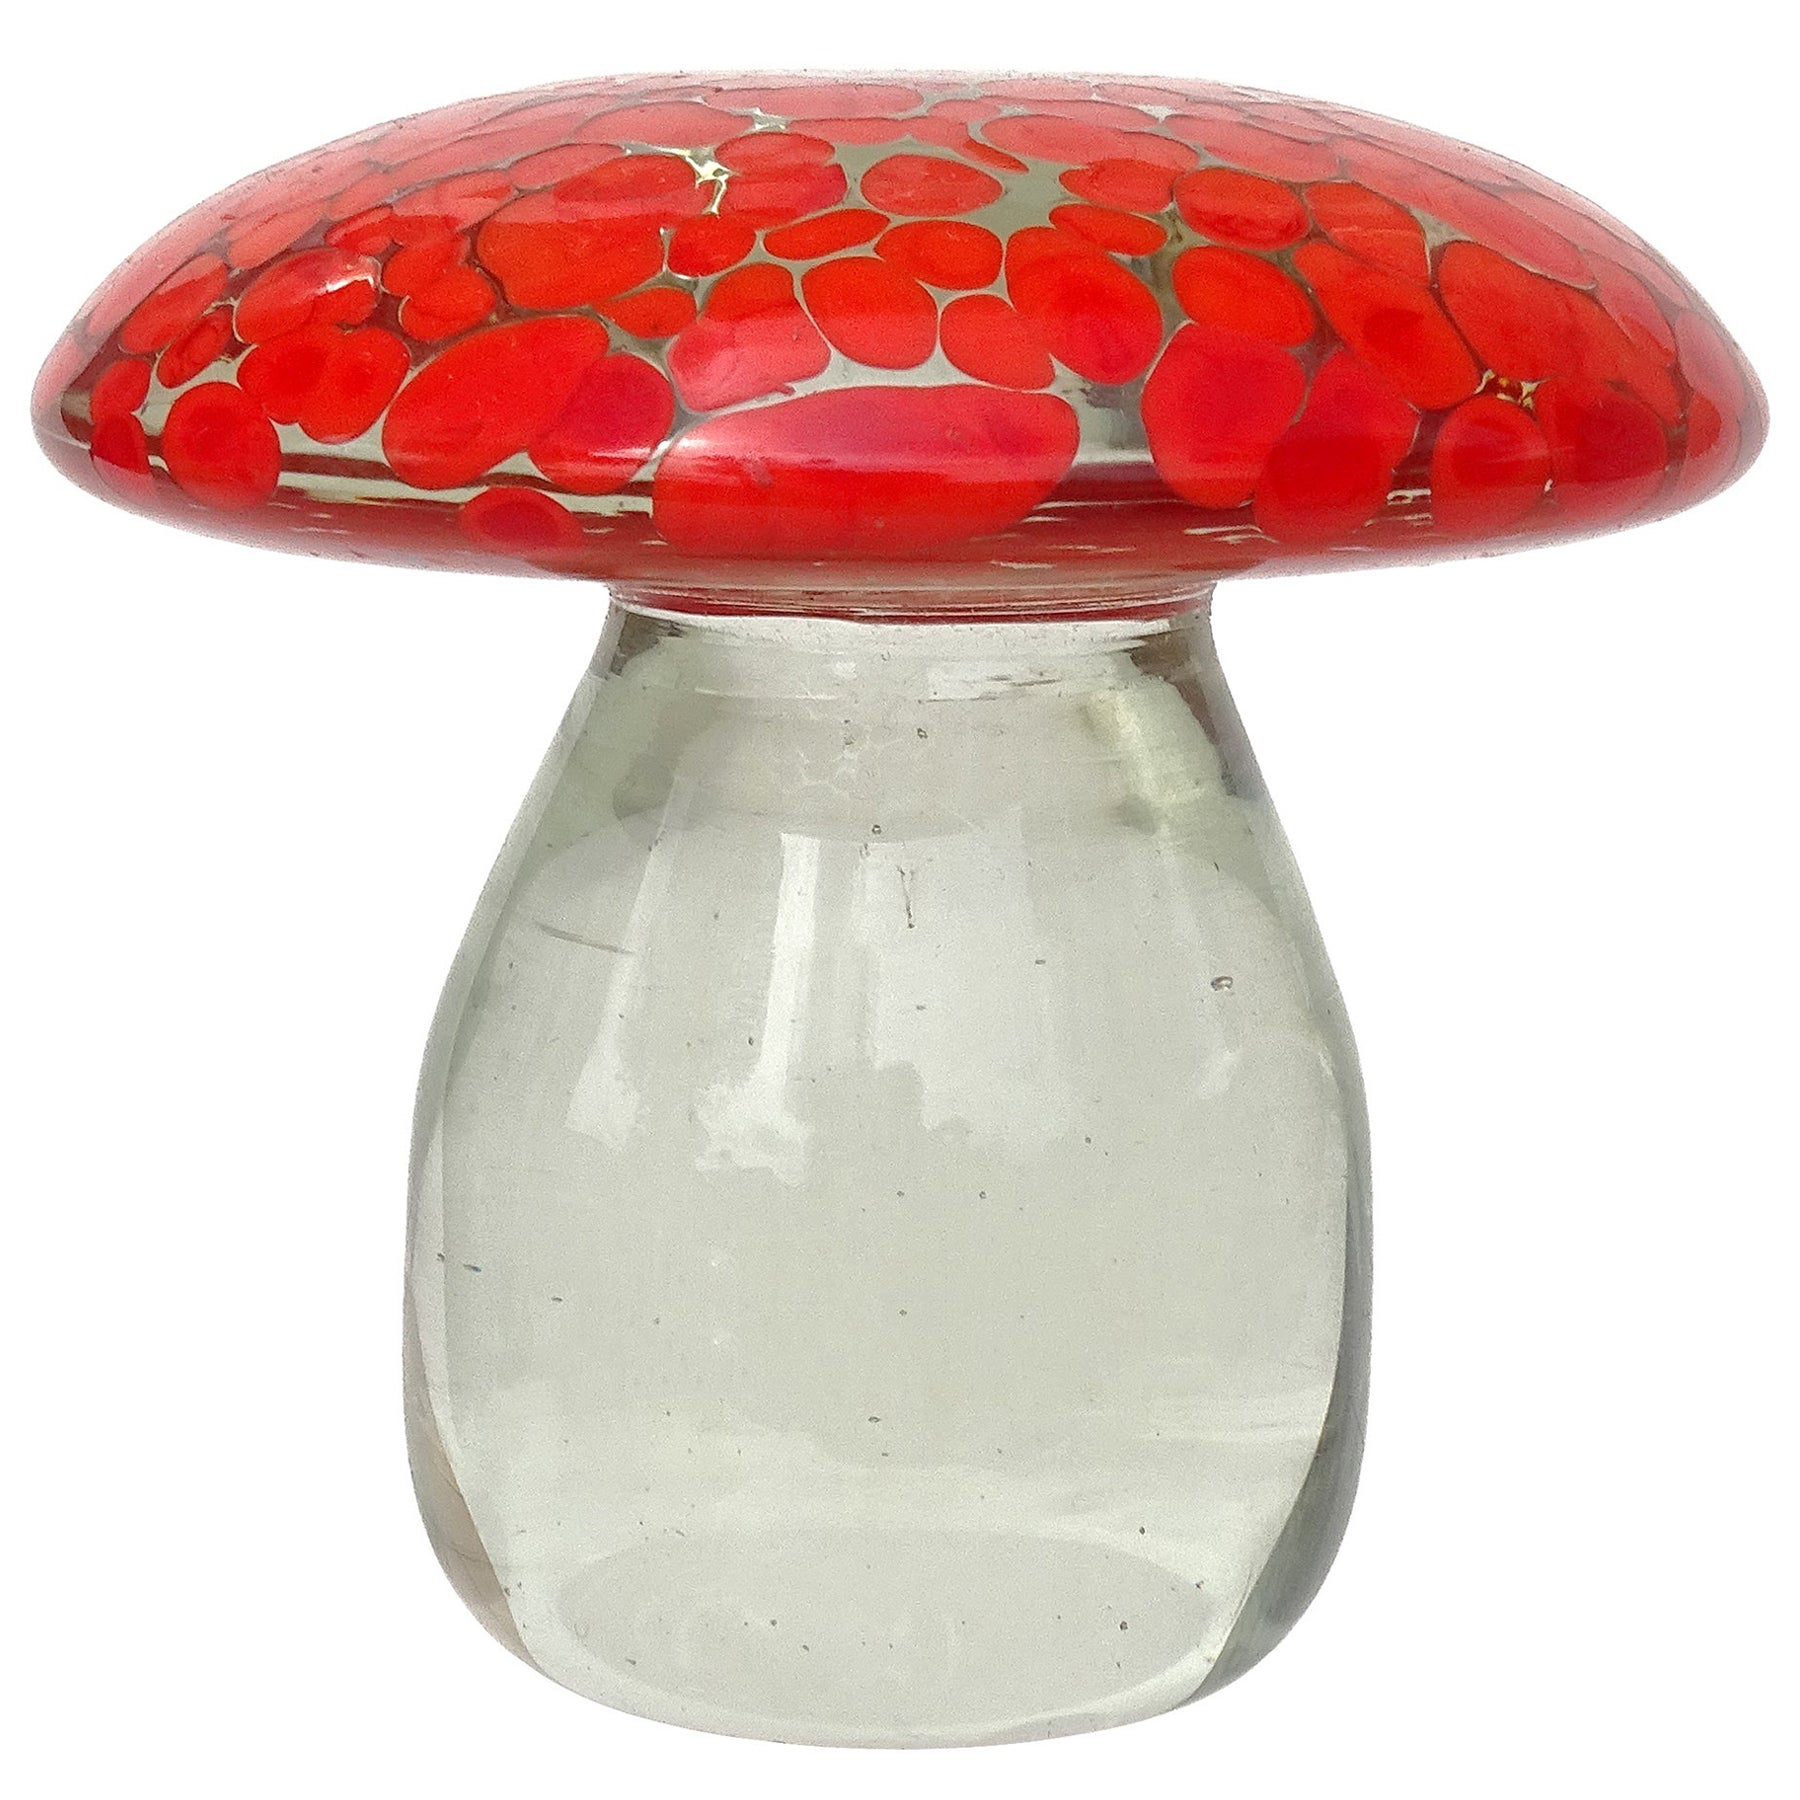 Presse-papiers figurine de tabouret champignon en verre d'art italien de Murano rouge orangé